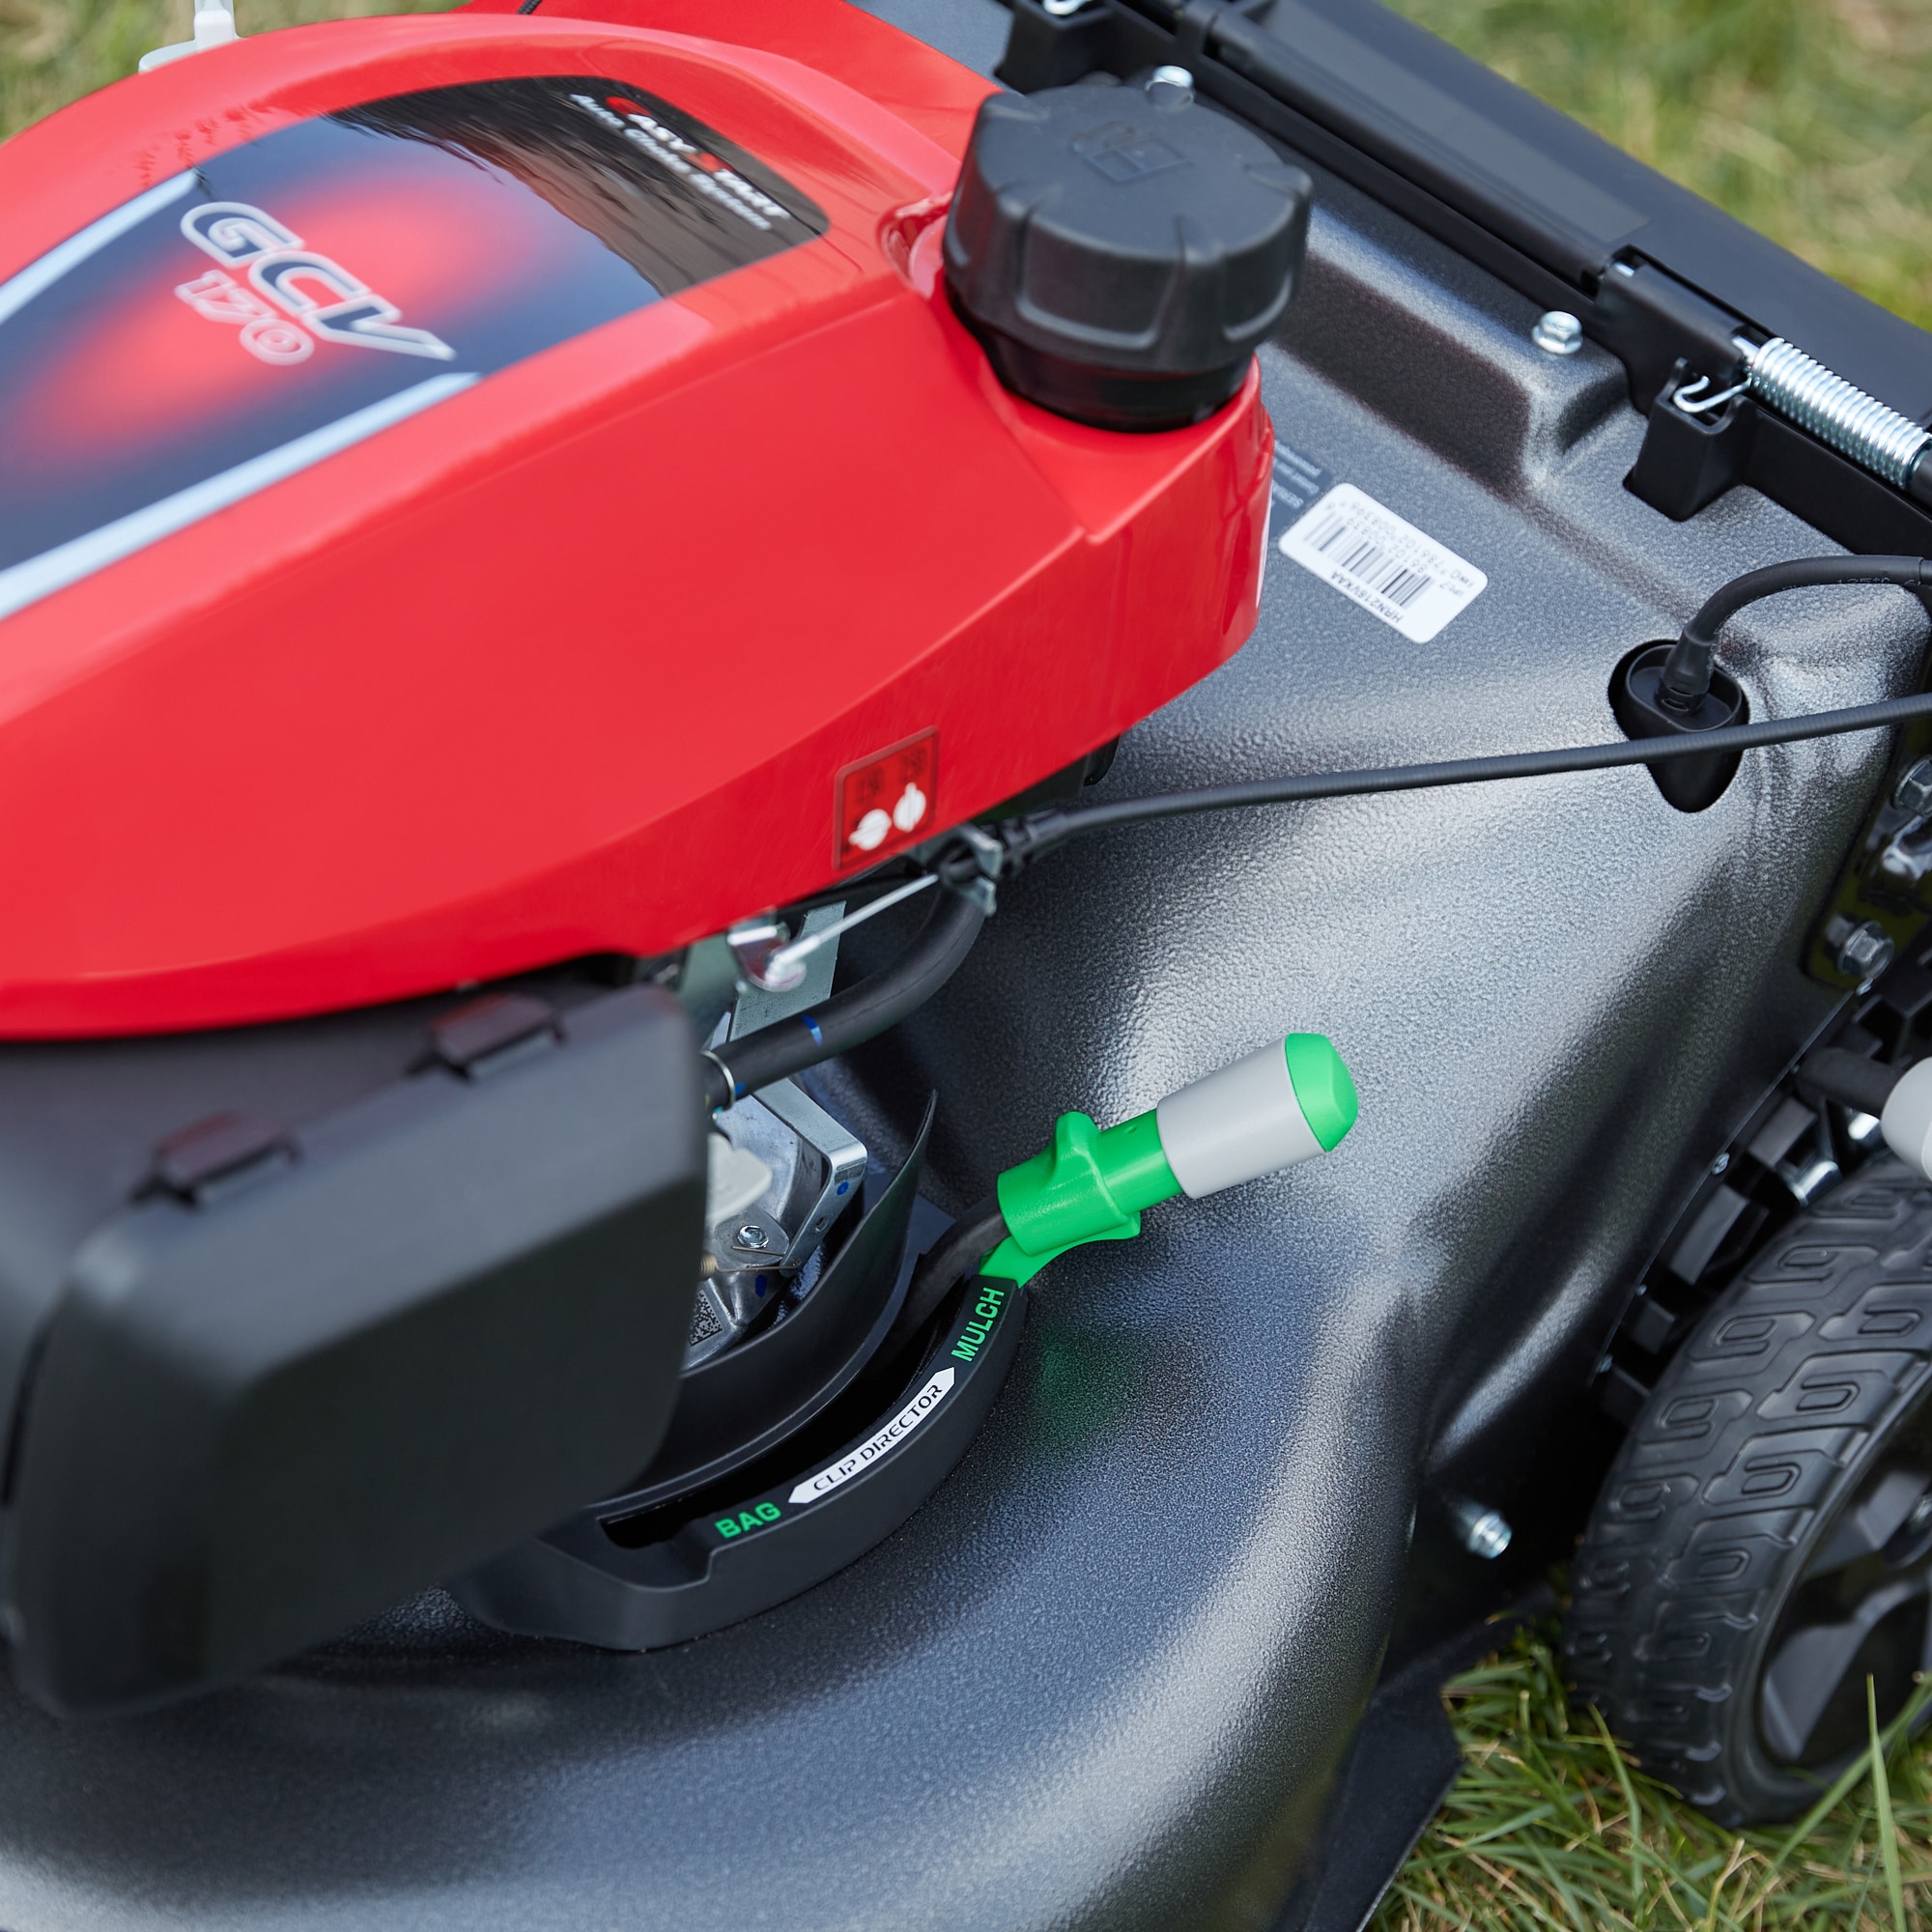 Honda HRN 166-cc 21-in Gas Self-propelled Lawn Mower Engine at